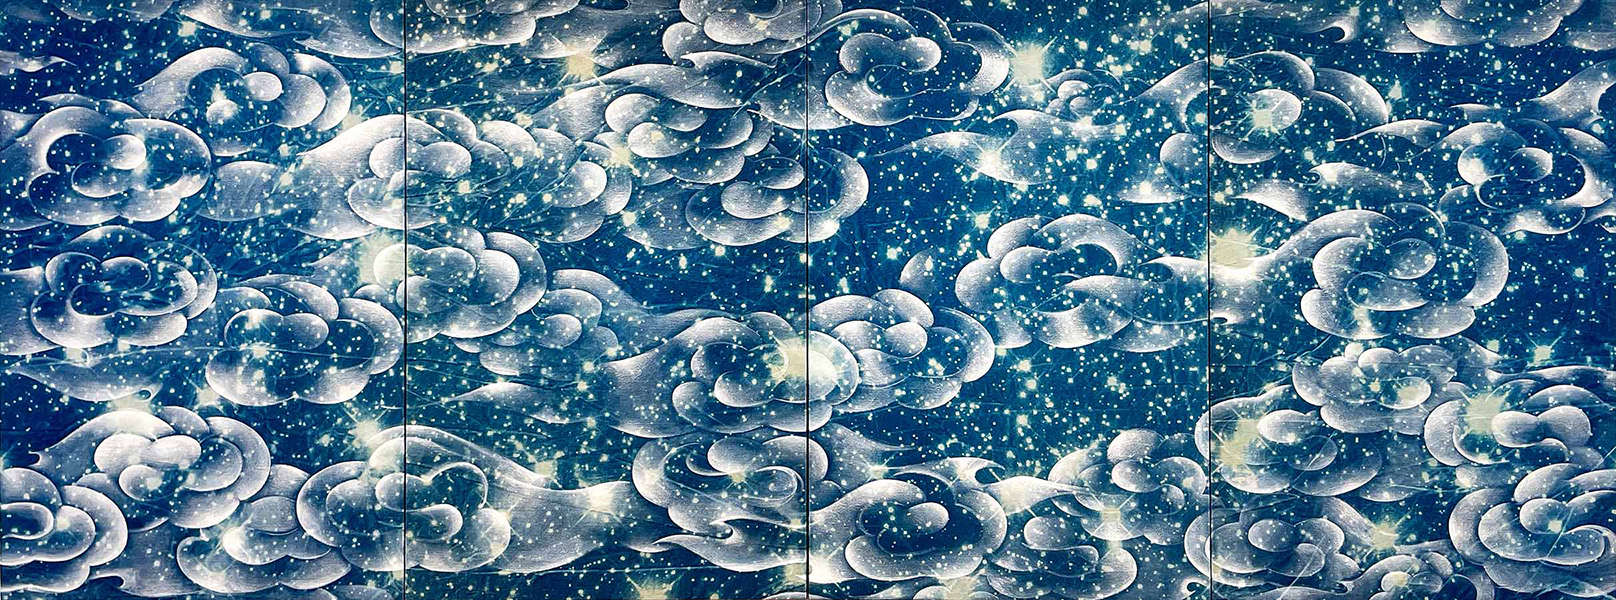 Ala Ebtekar - Zenith (IX) (SOLD), 2022, acrylic over cyanotype exposed by sunlight on canvas, 30" x 80" overall (4 panels)